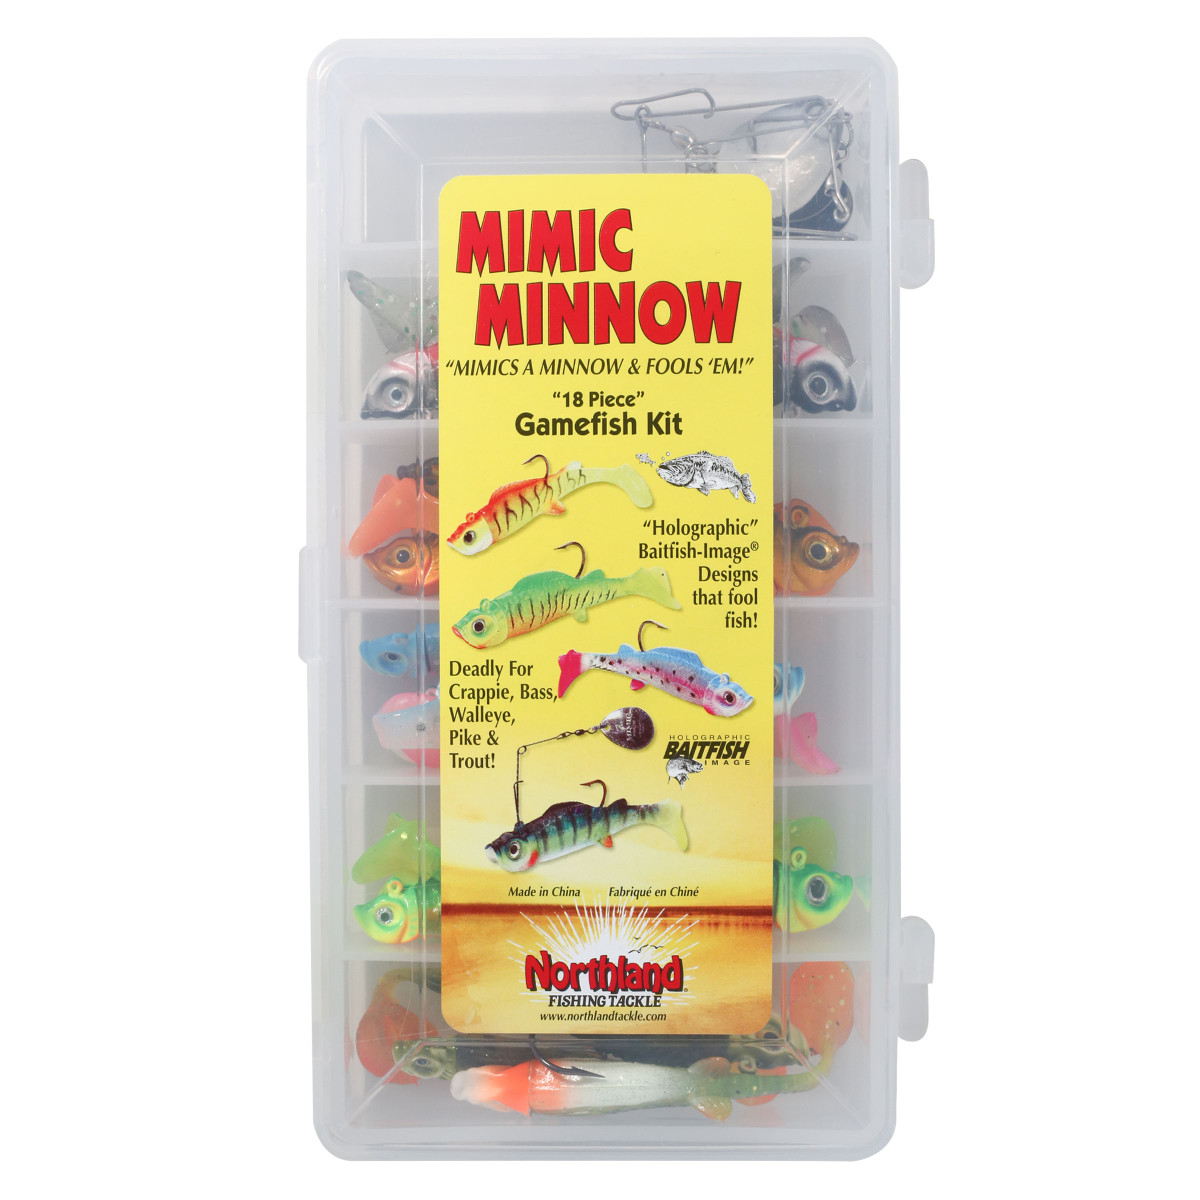 Mimic Minnow Gamefish Kit - Northland Fishing Tackle